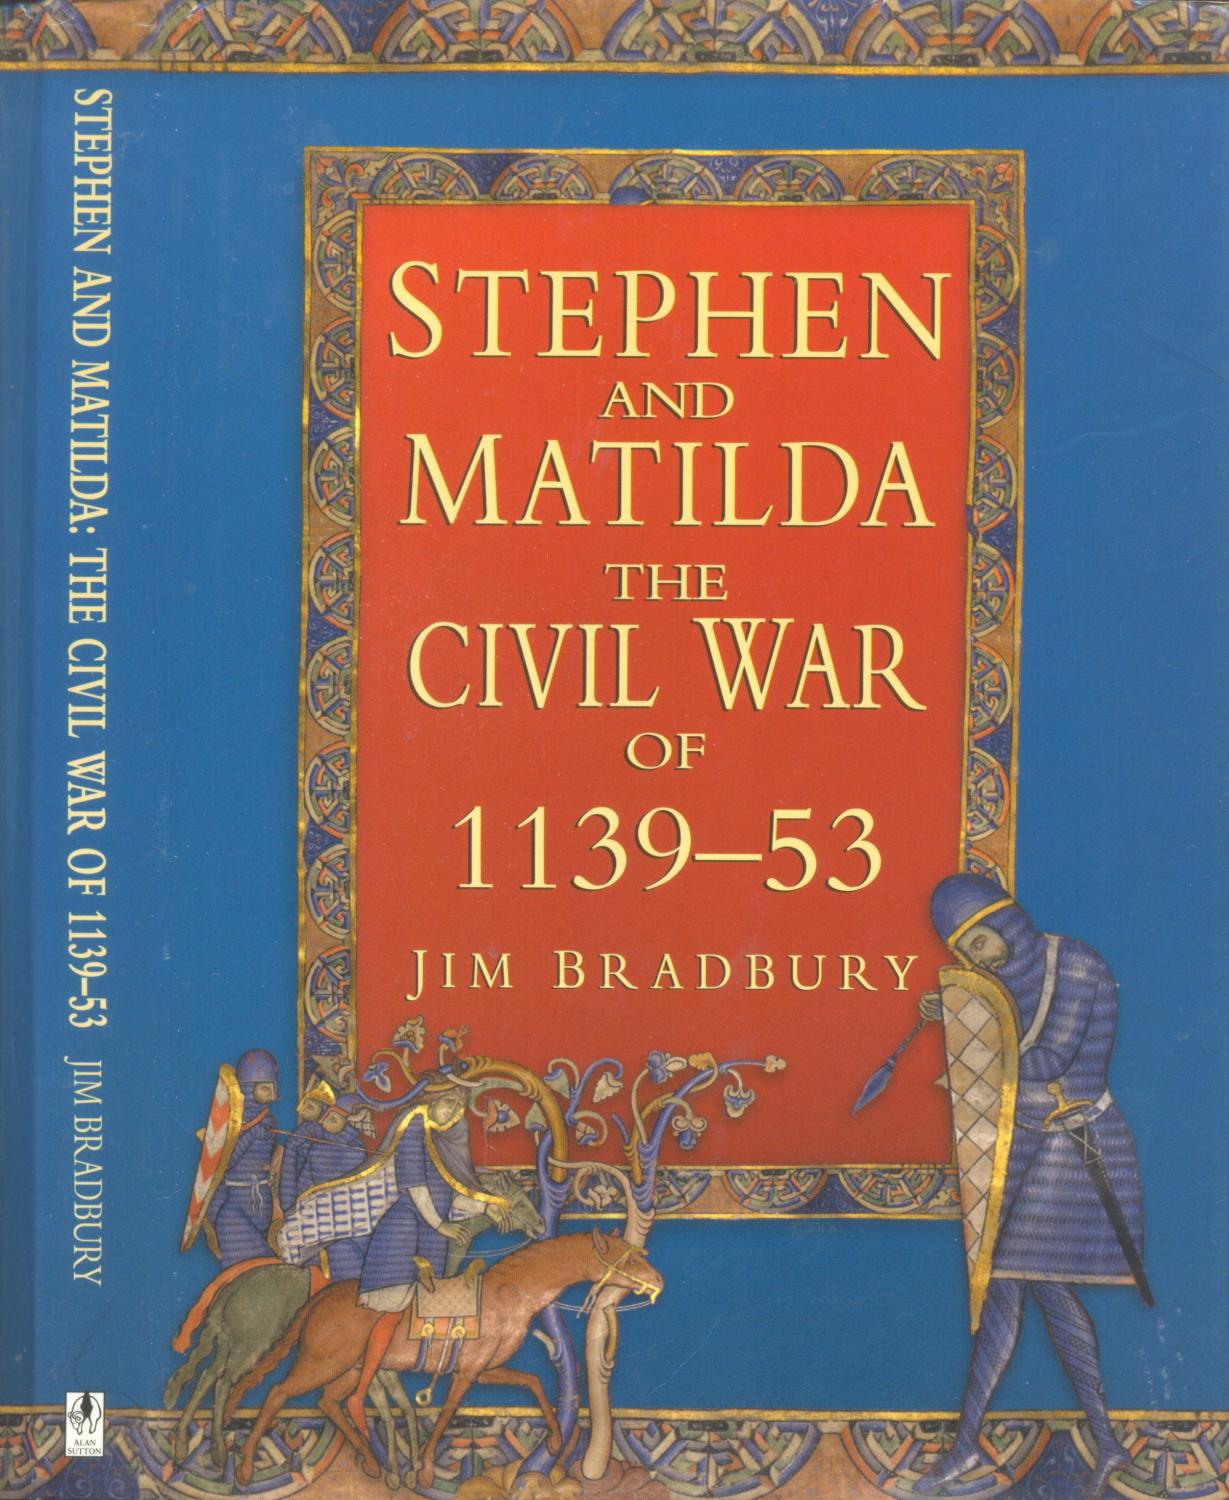 Stephen and Matilda - The Civil War of 1139-53